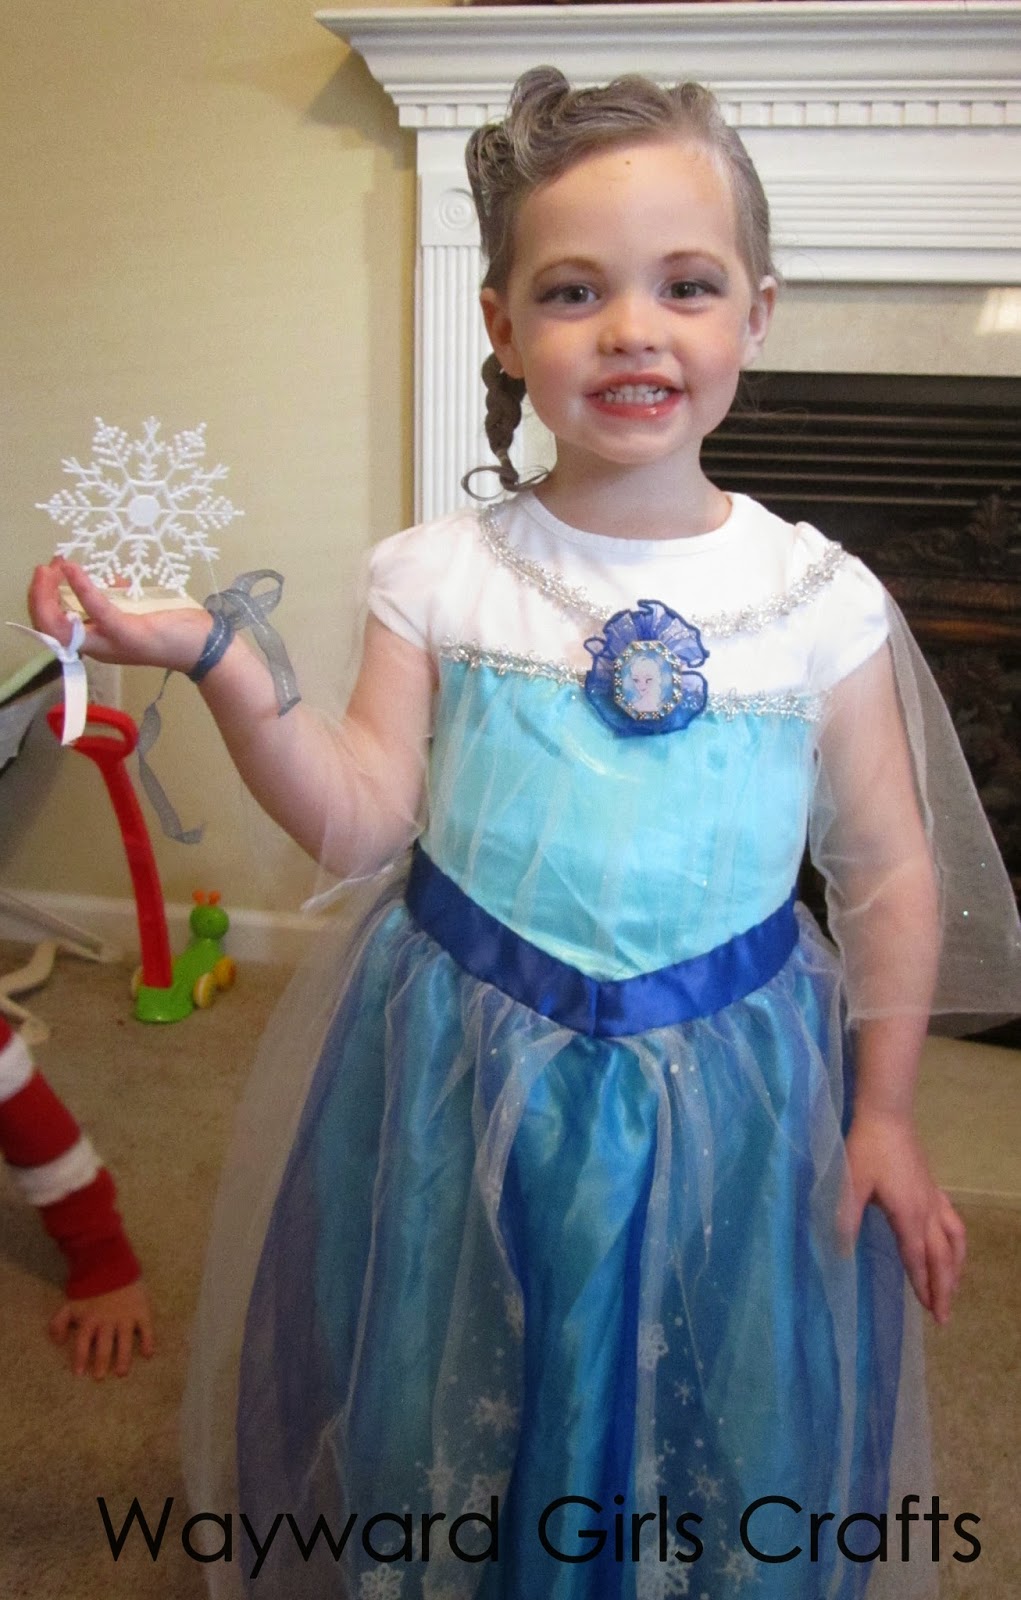 Wayward Girls' Crafts: Halloween 2014 Costumes: Frozen!!